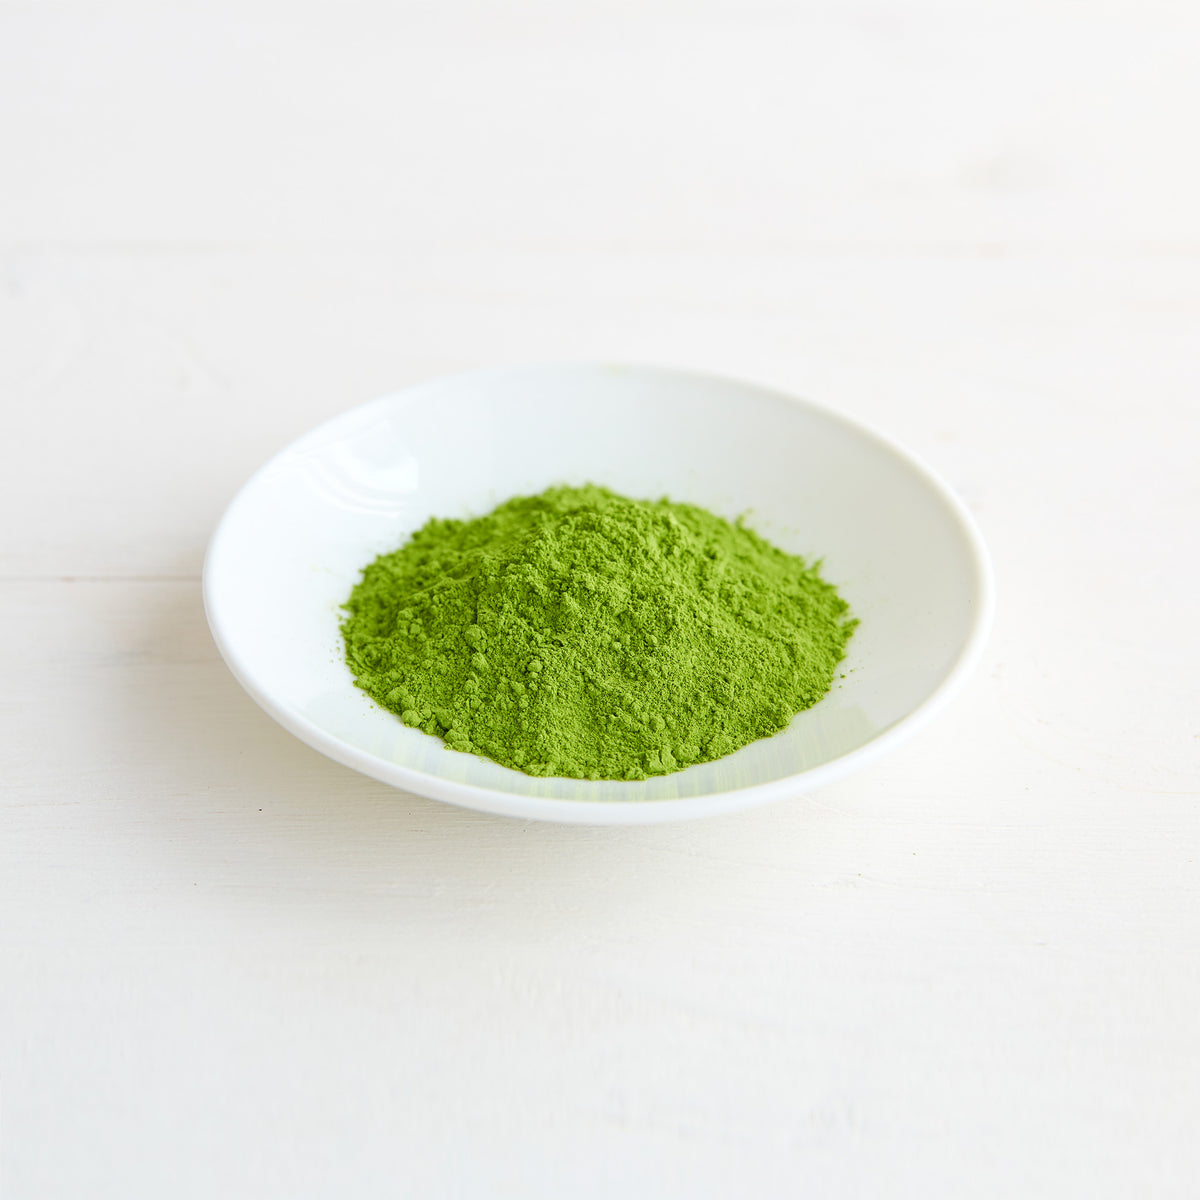 Organic Japanese Matcha Green Tea Powder - Ceremonial Grade - Gift Set